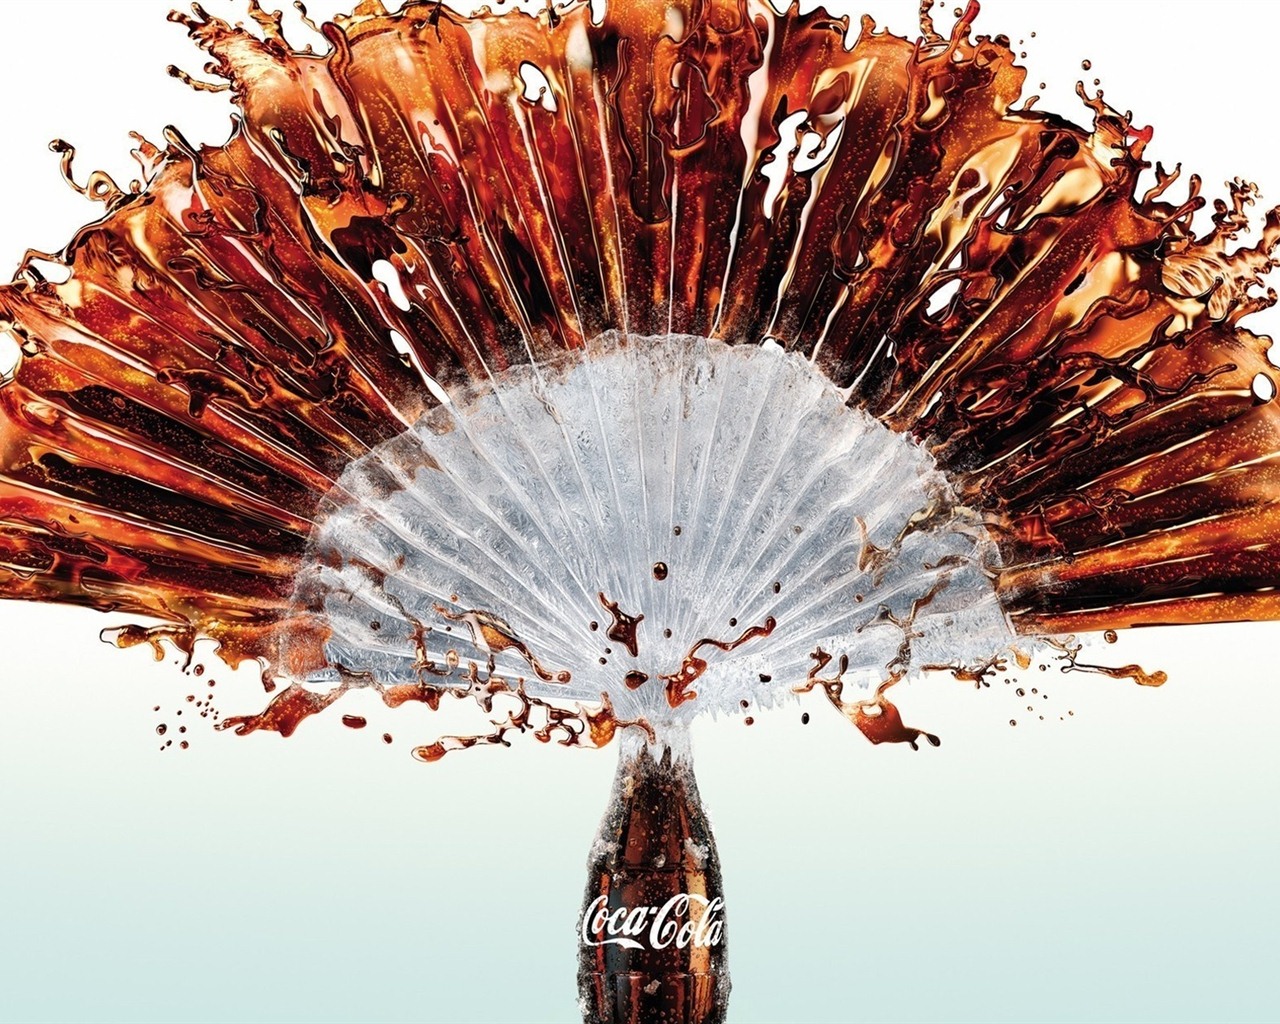 Coca-Cola 可口可樂精美廣告壁紙 #1 - 1280x1024